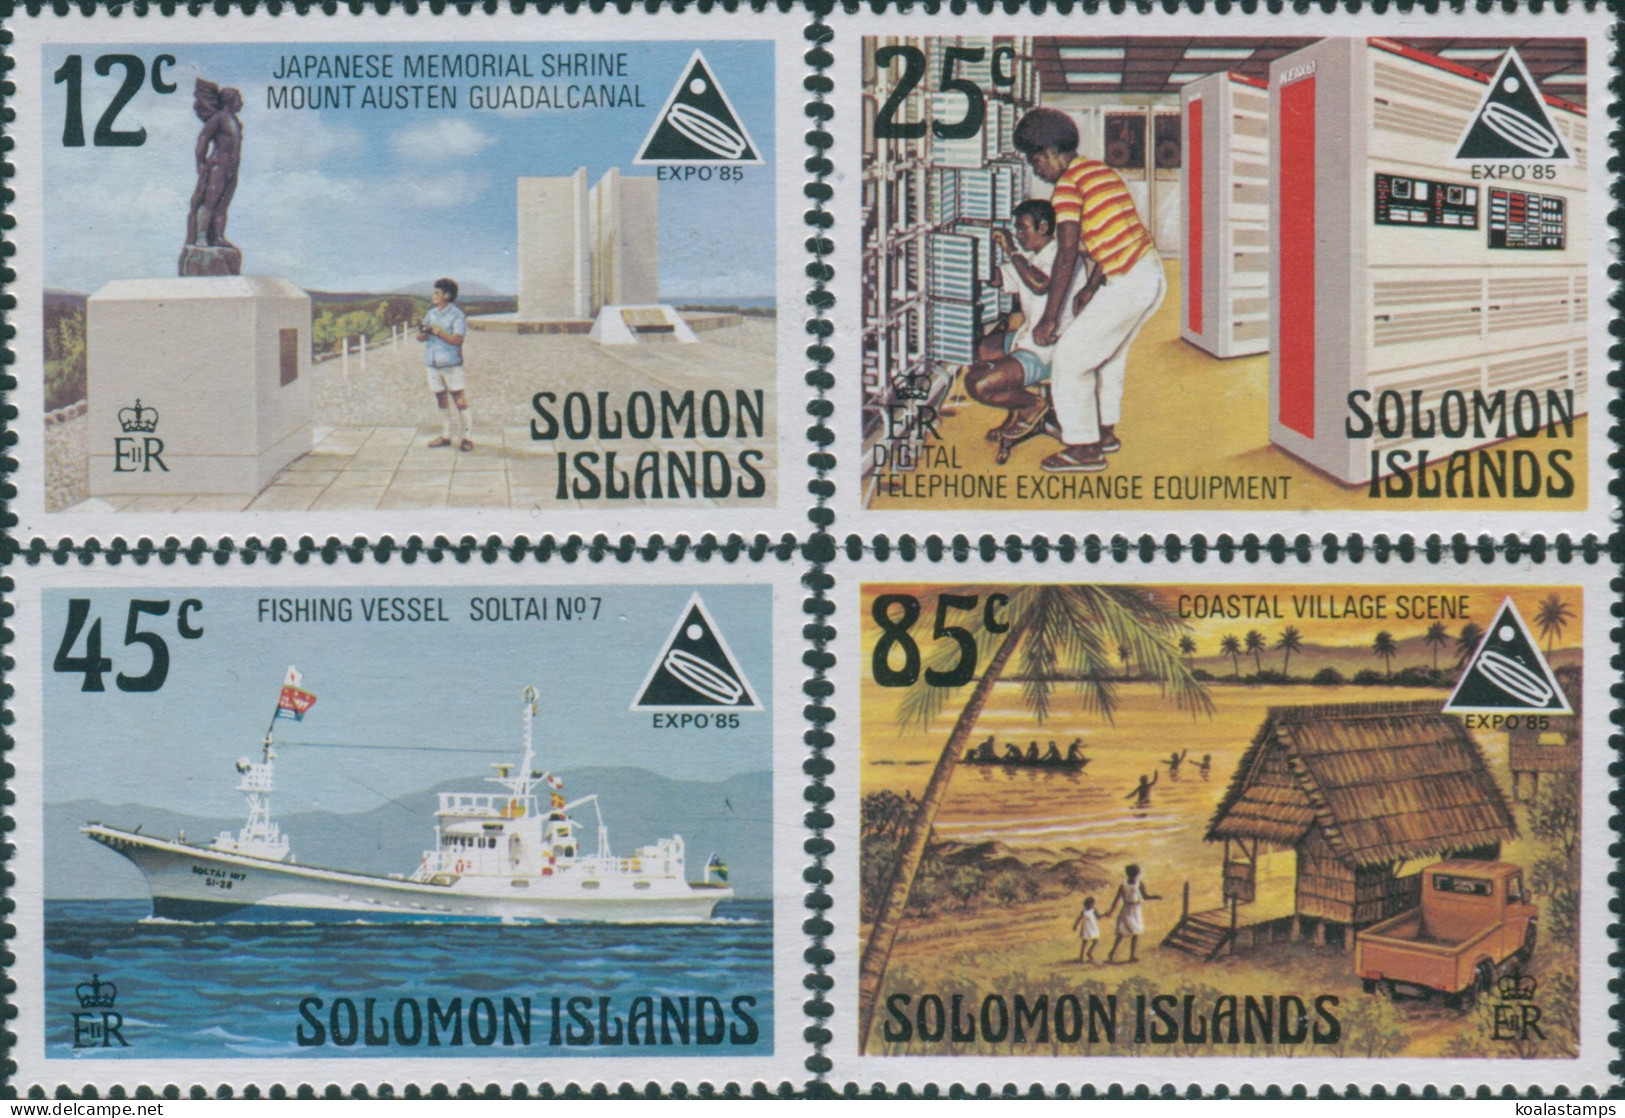 Solomon Islands 1985 SG543-546 Expo World Fair Japan Set MNH - Solomon Islands (1978-...)